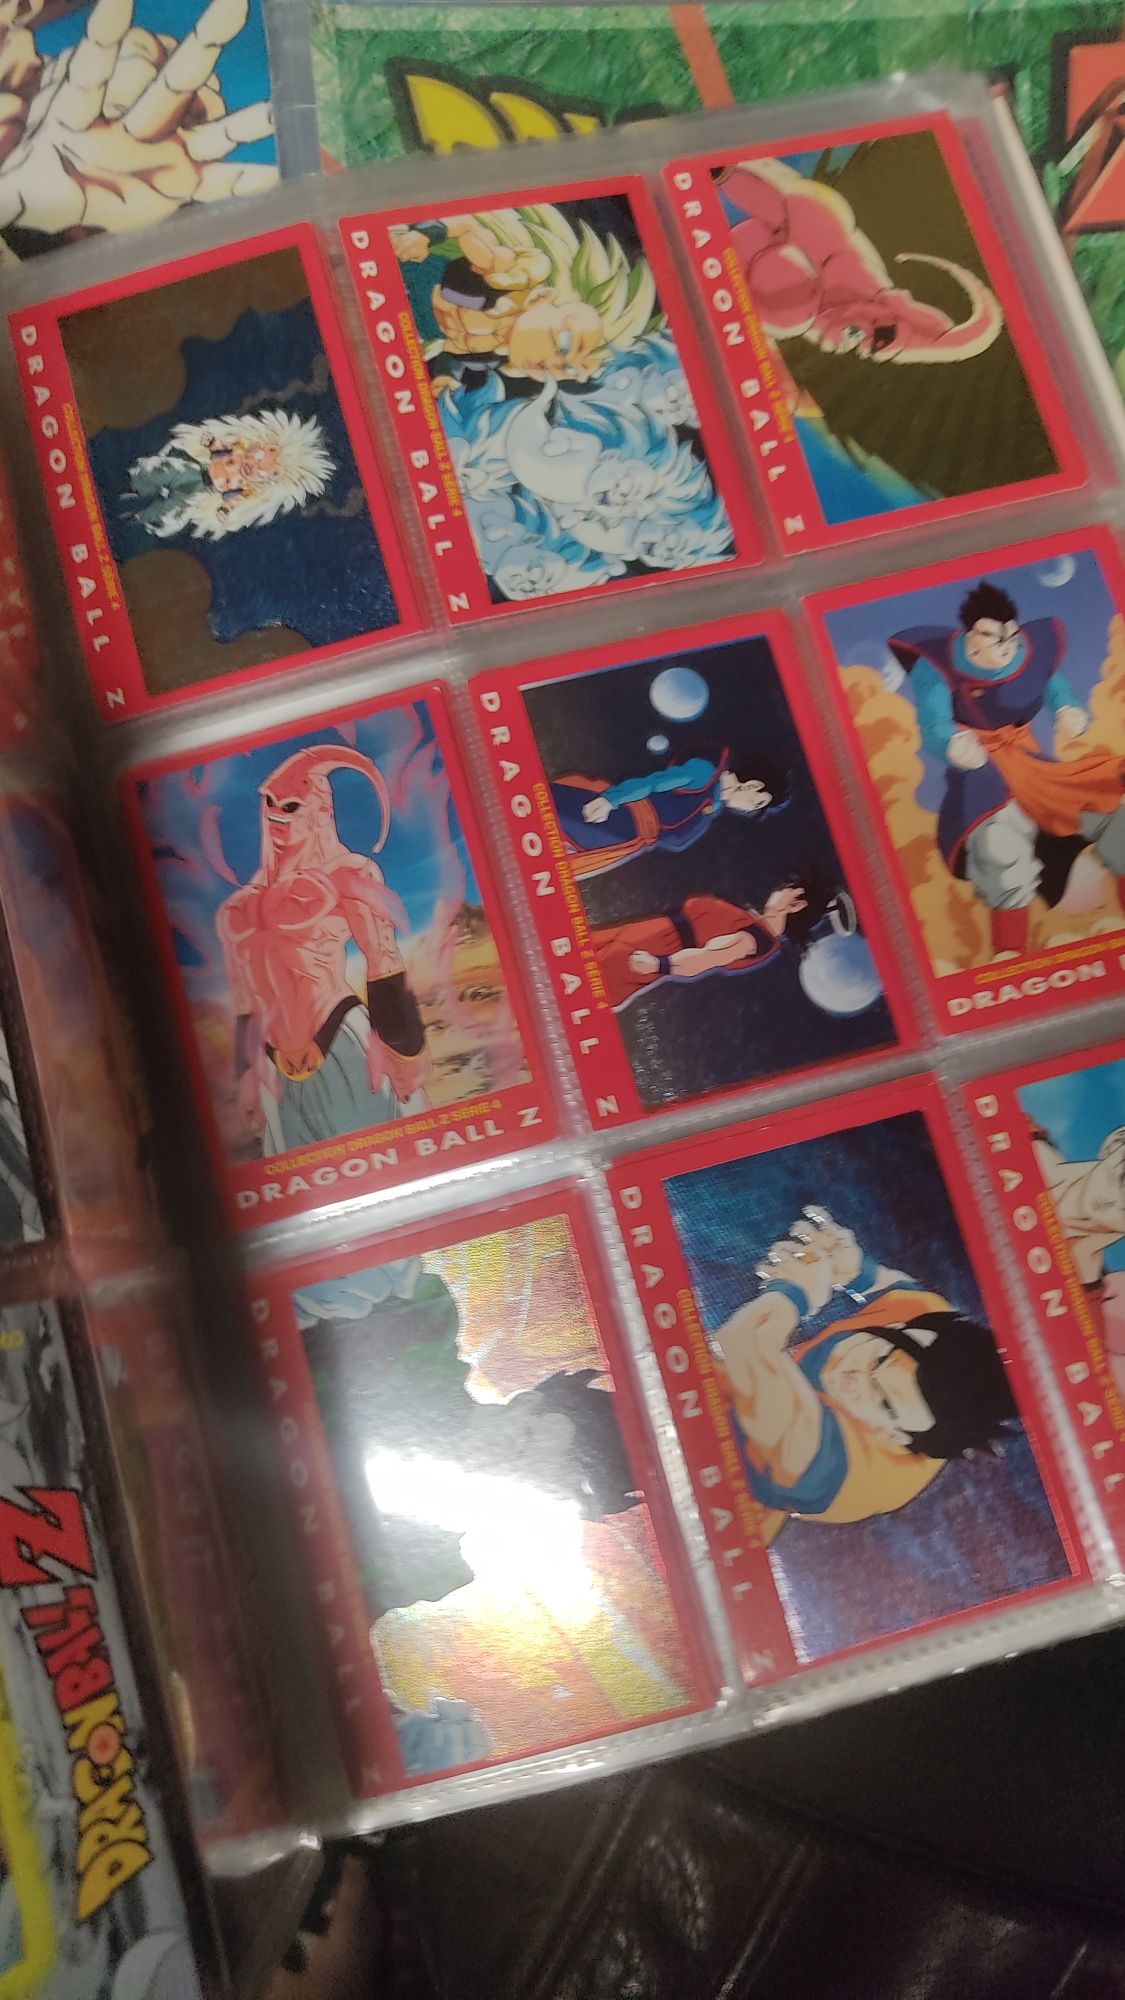 Dragon Ball Z serie 4 Panini cards